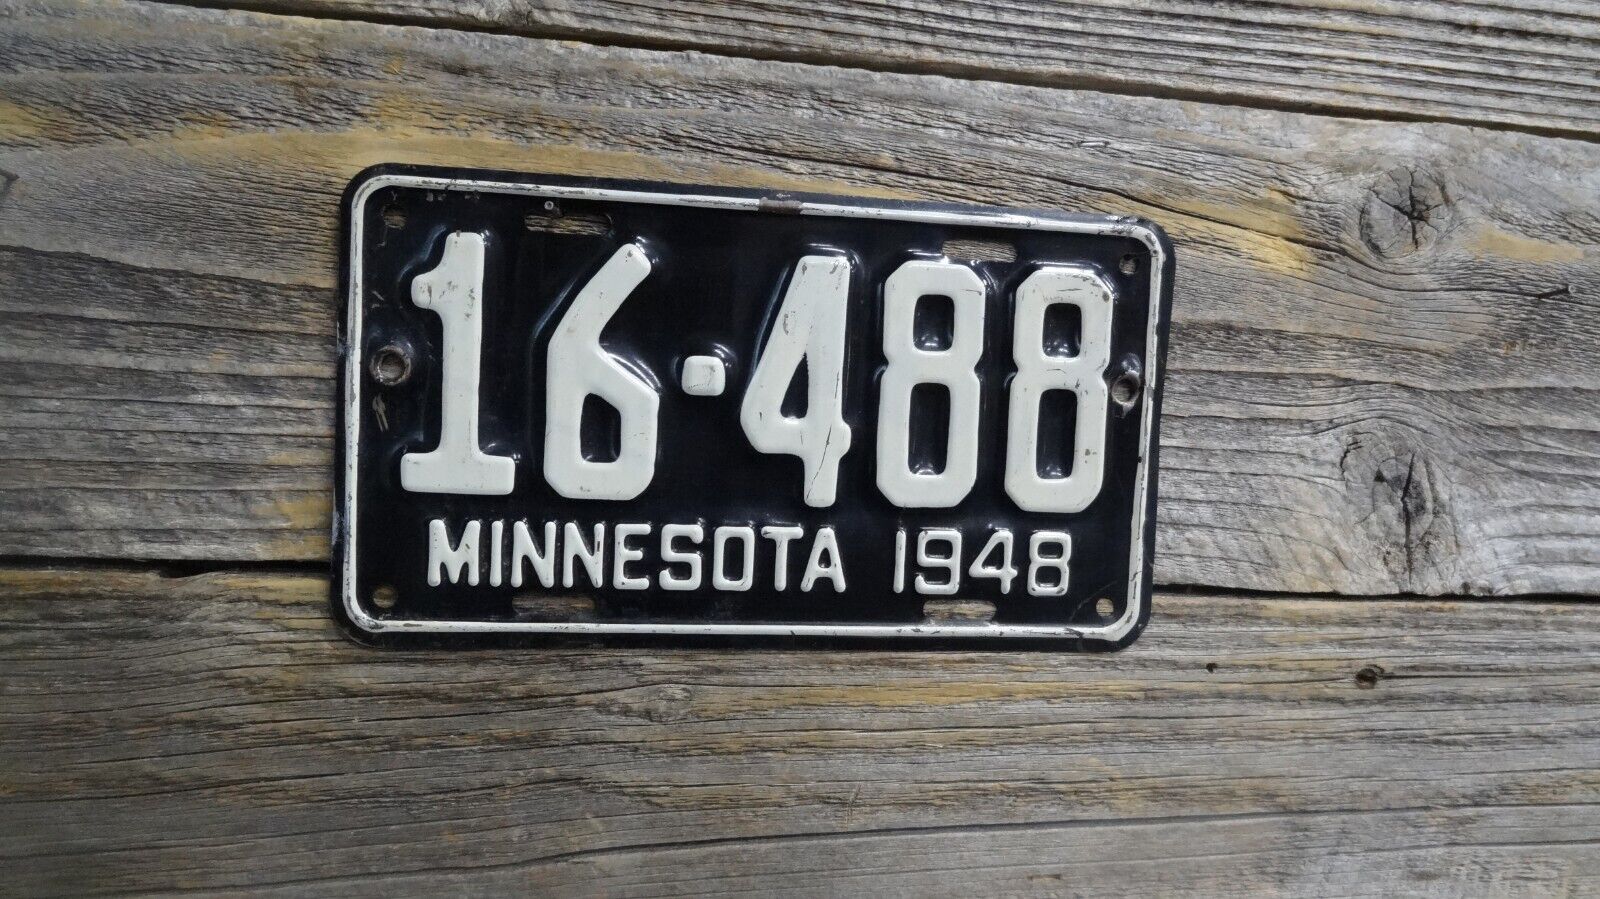 1948 Minnesota Passenger License Plate with Original Paint 10,000 Lakes MN Plate